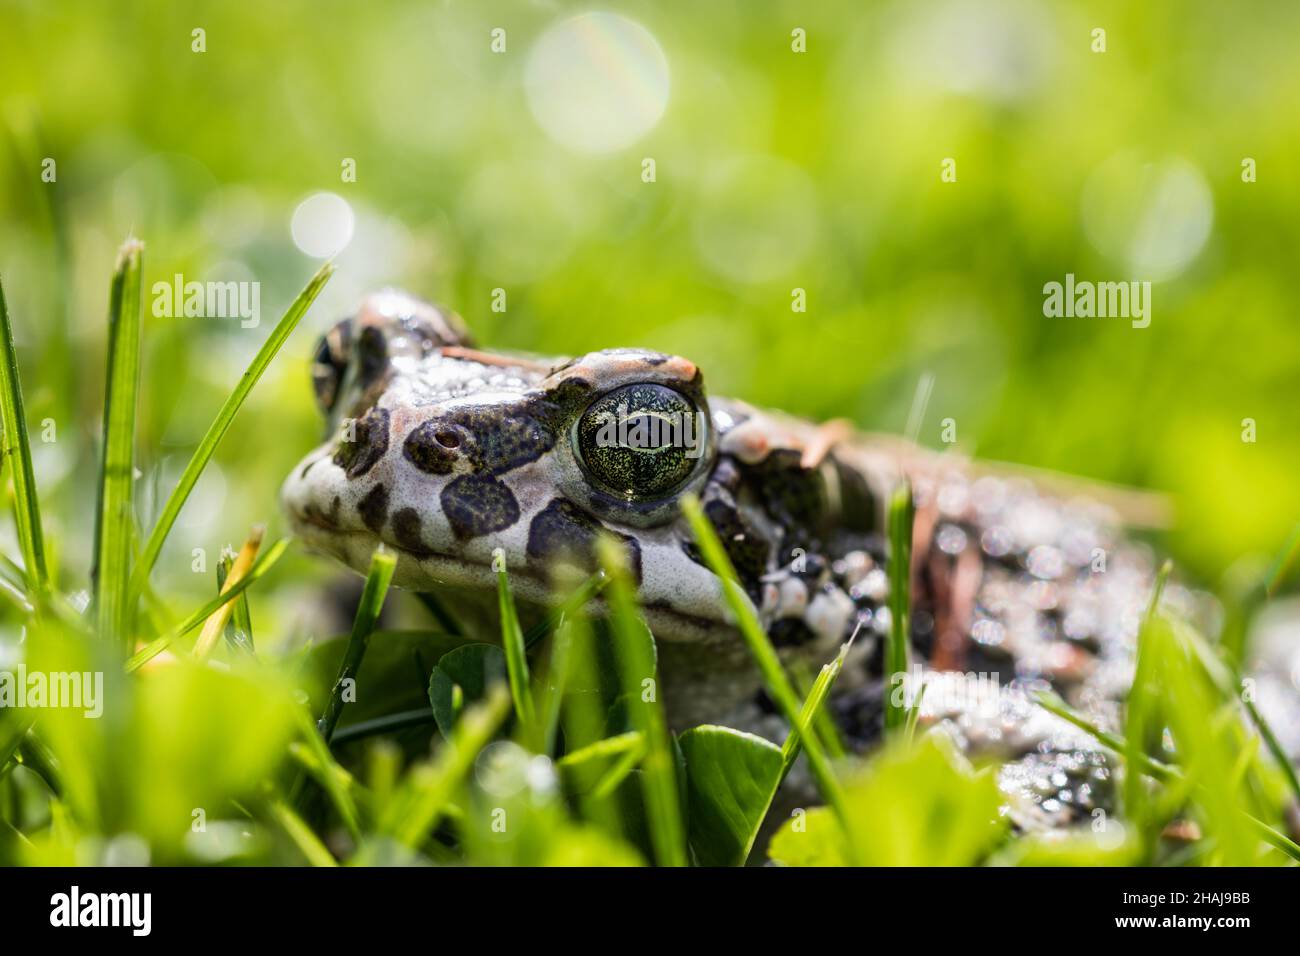 Green toad (Bufotes viridis) in grass. Frog in garden. Amphibian animal Stock Photo